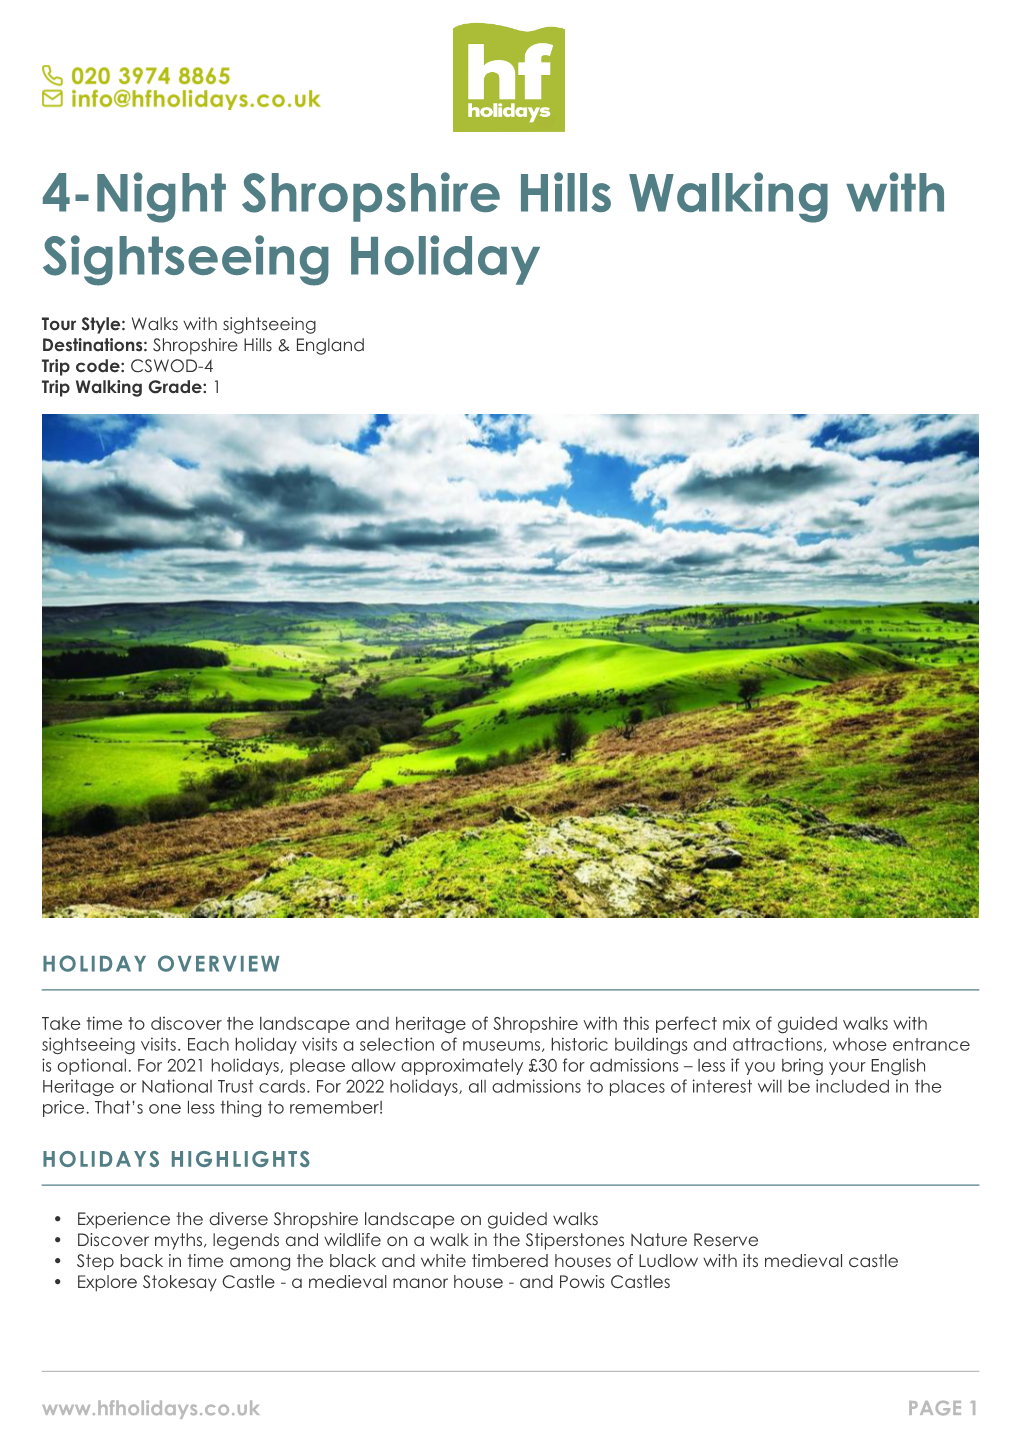 4-Night Shropshire Hills Walking with Sightseeing Holiday